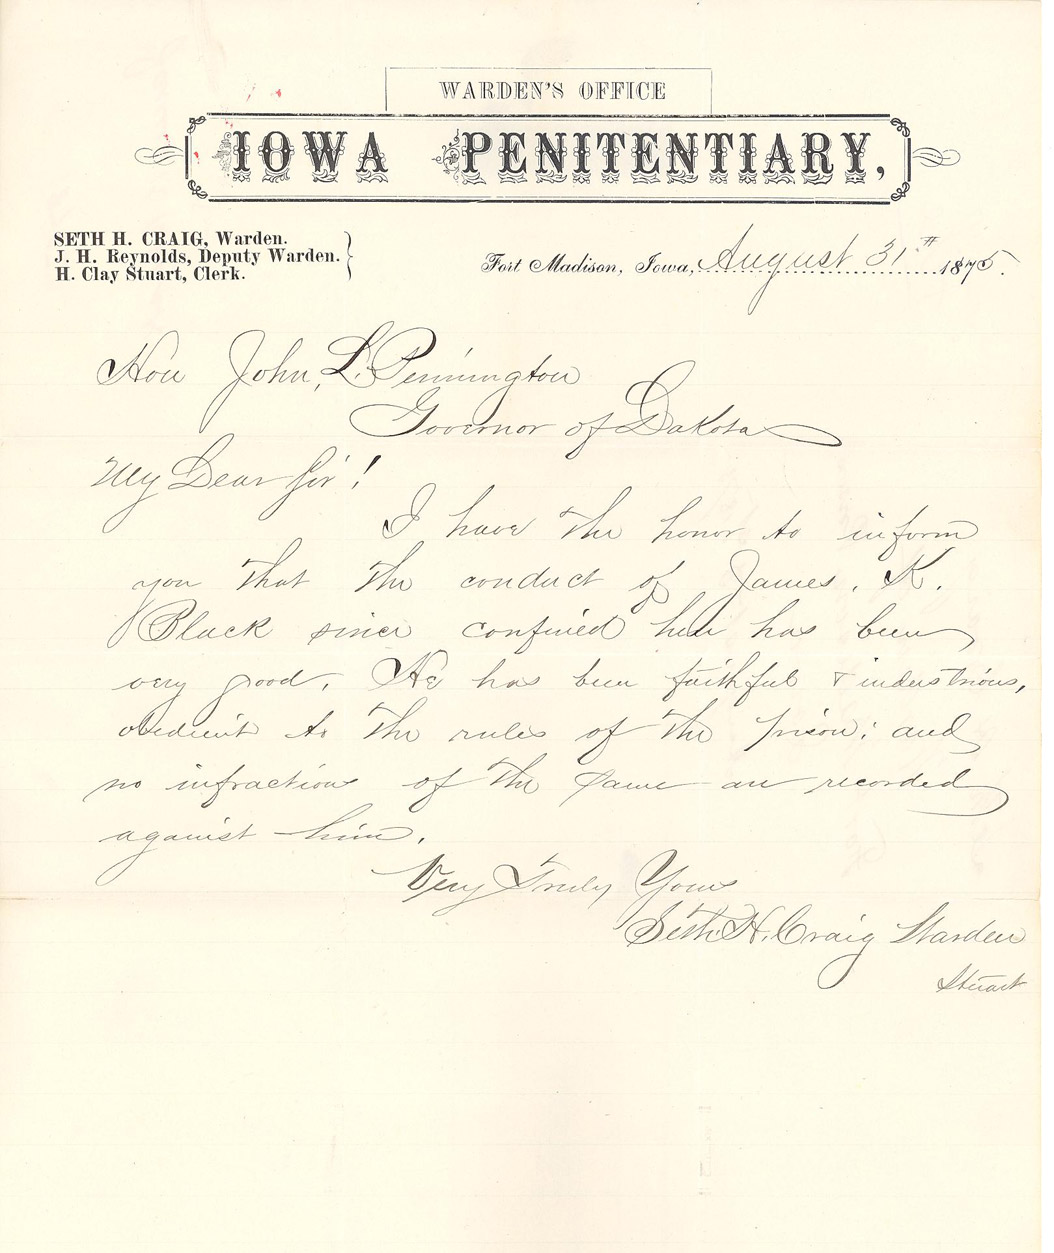 Warden's Letter from Iowa